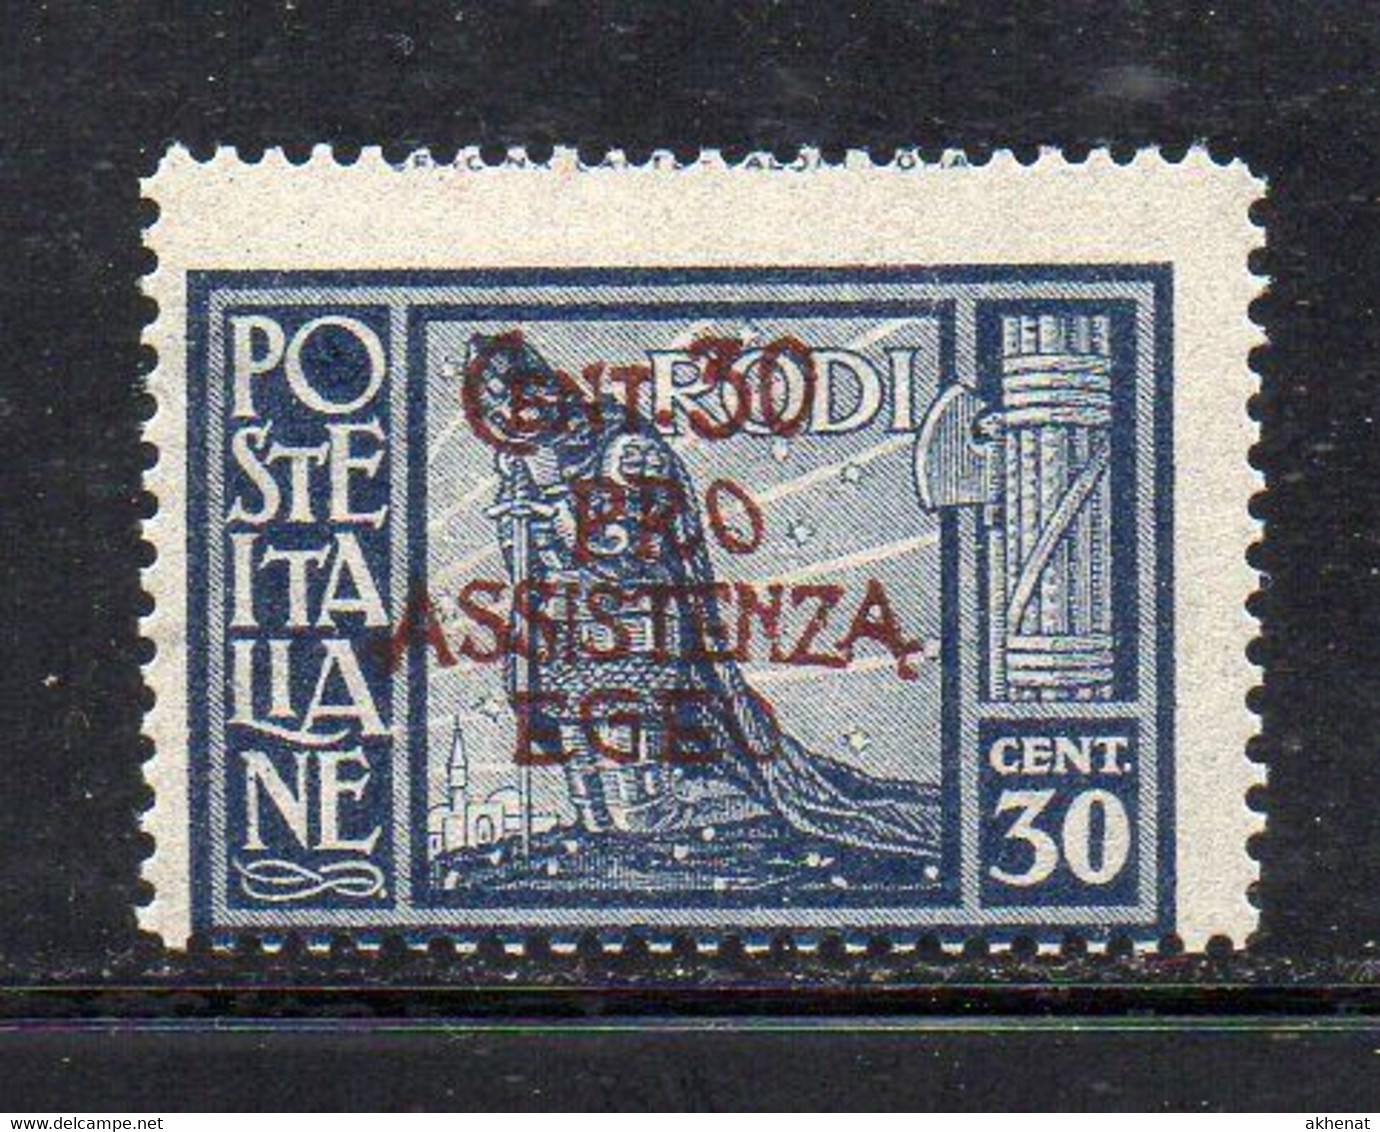 XP3214 - EGEO , Occupazione Tedesca 1943: 30+30 Cent Sassone N. 122  ***  MNH - Aegean (German Occ.)